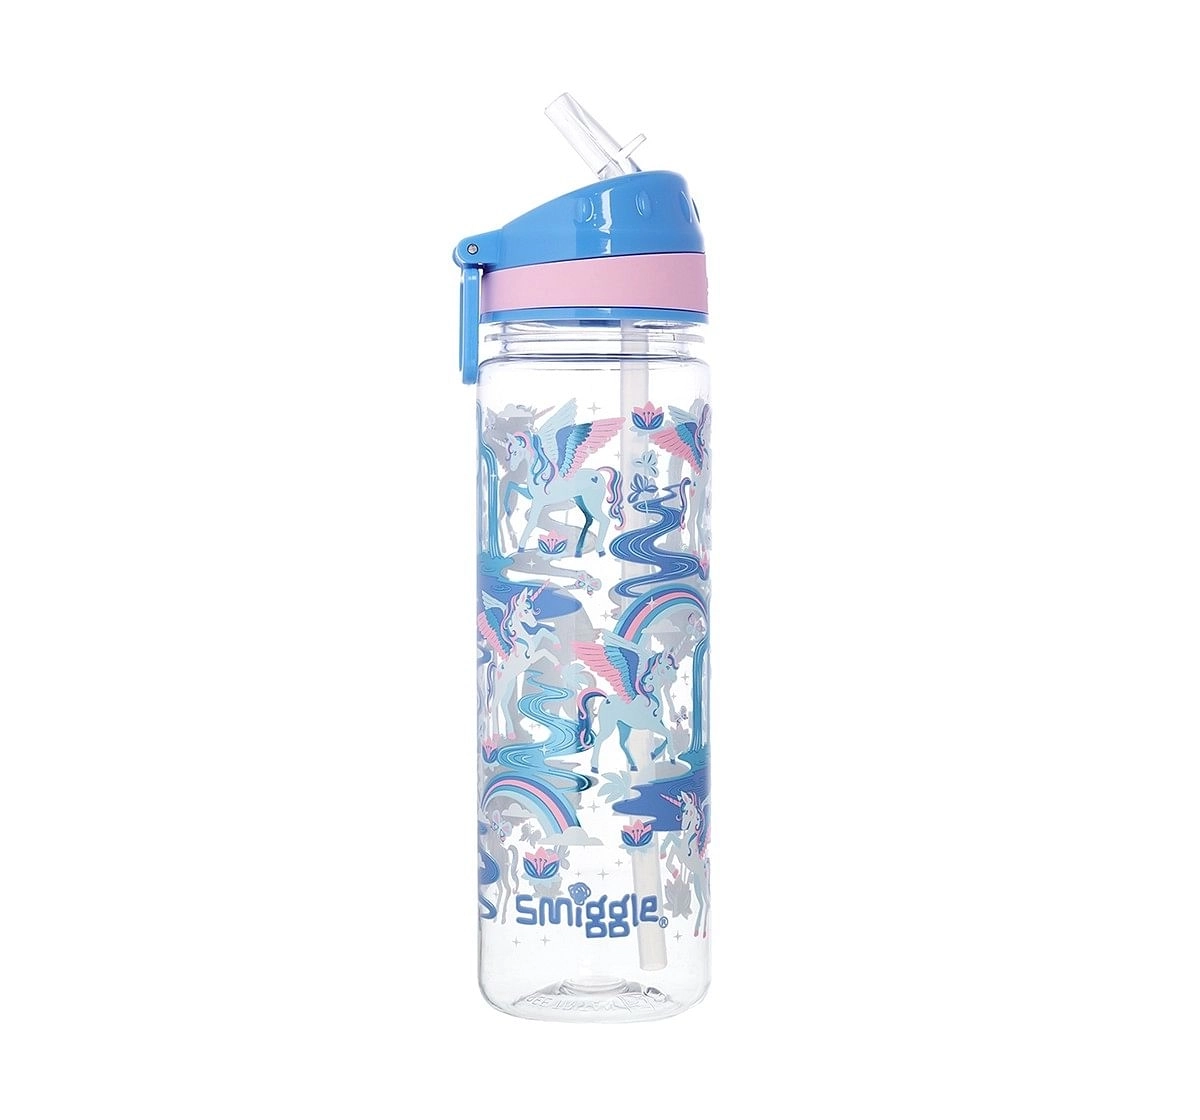 Smiggle Far Away Drink Bottle with Flip Top Spout - Unicorn Print Bags for Kids age 3Y+ (Cornflower Blue)